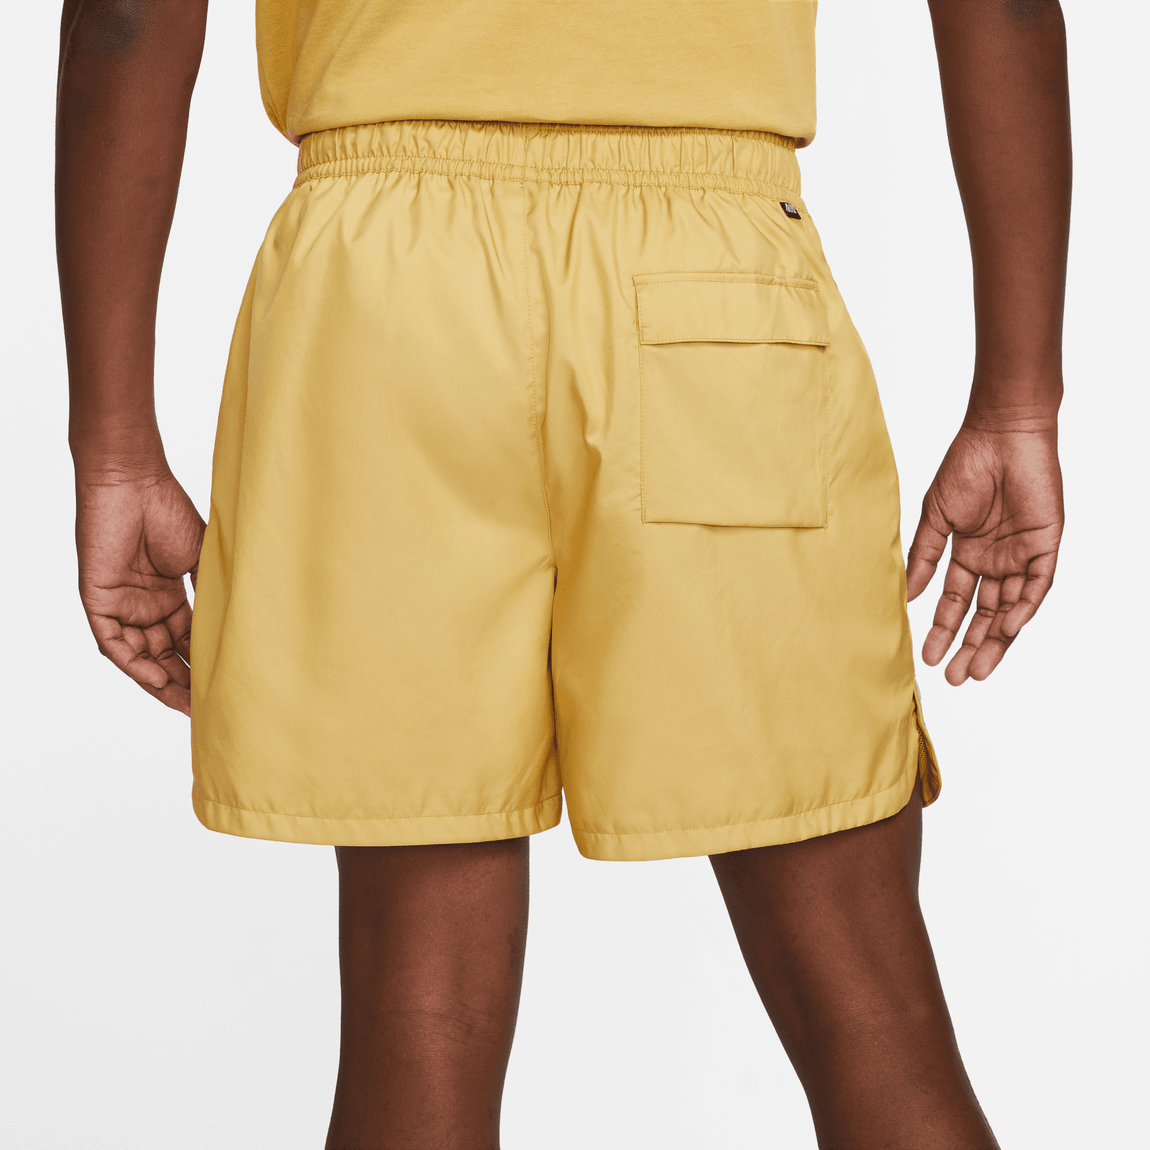 Nike Sportswear Sport Essentials Shorts (Wheat Gold/White) - Nike Sportswear Sport Essentials Shorts (Wheat Gold/White) - 